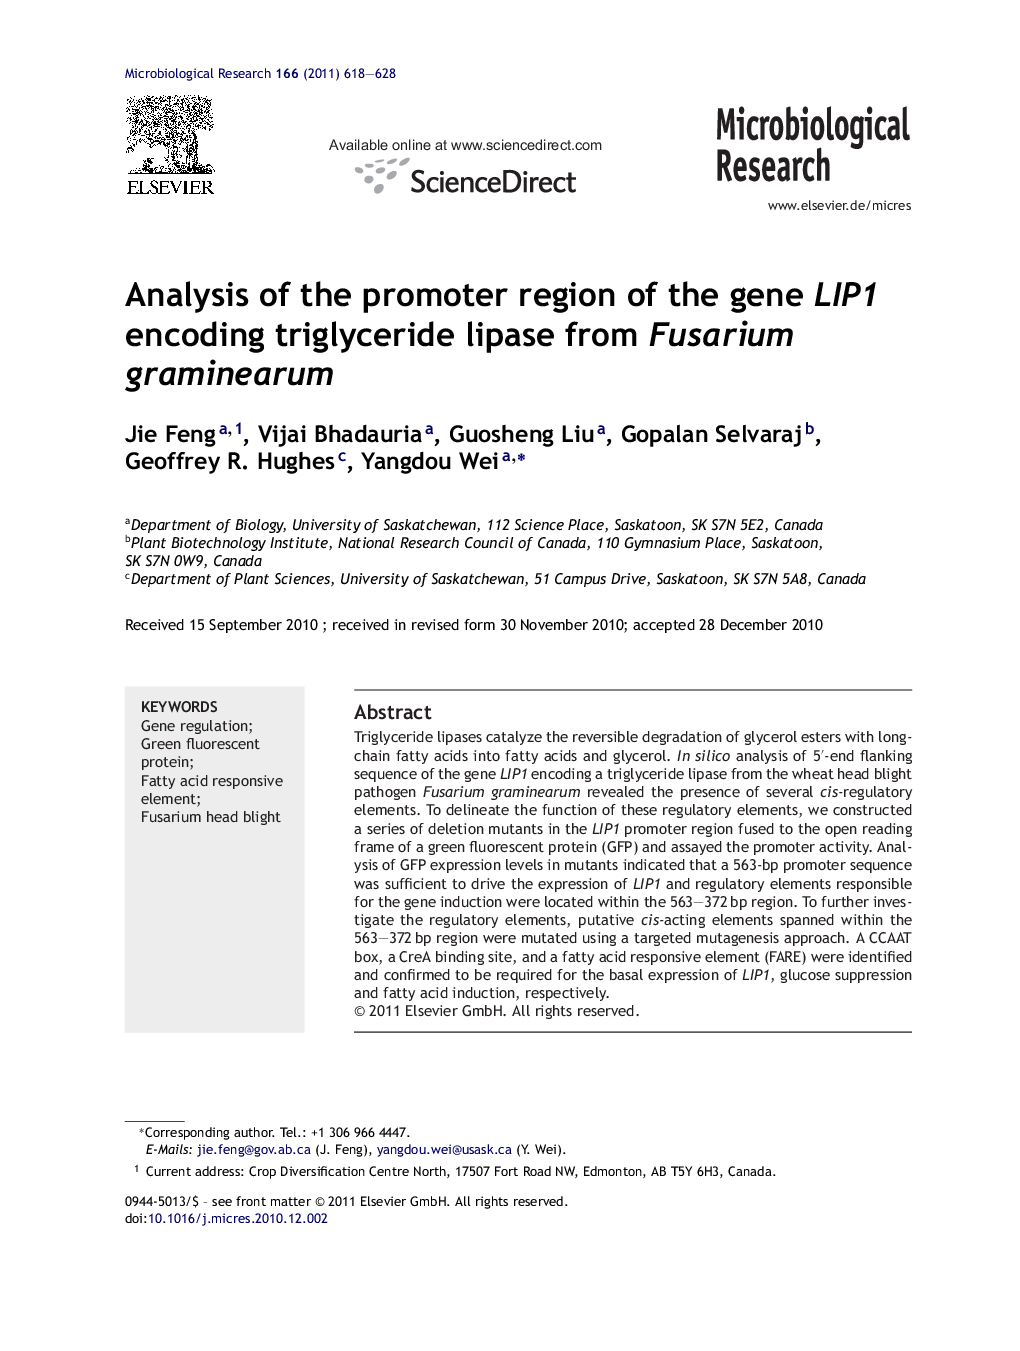 Analysis of the promoter region of the gene LIP1 encoding triglyceride lipase from Fusarium graminearum